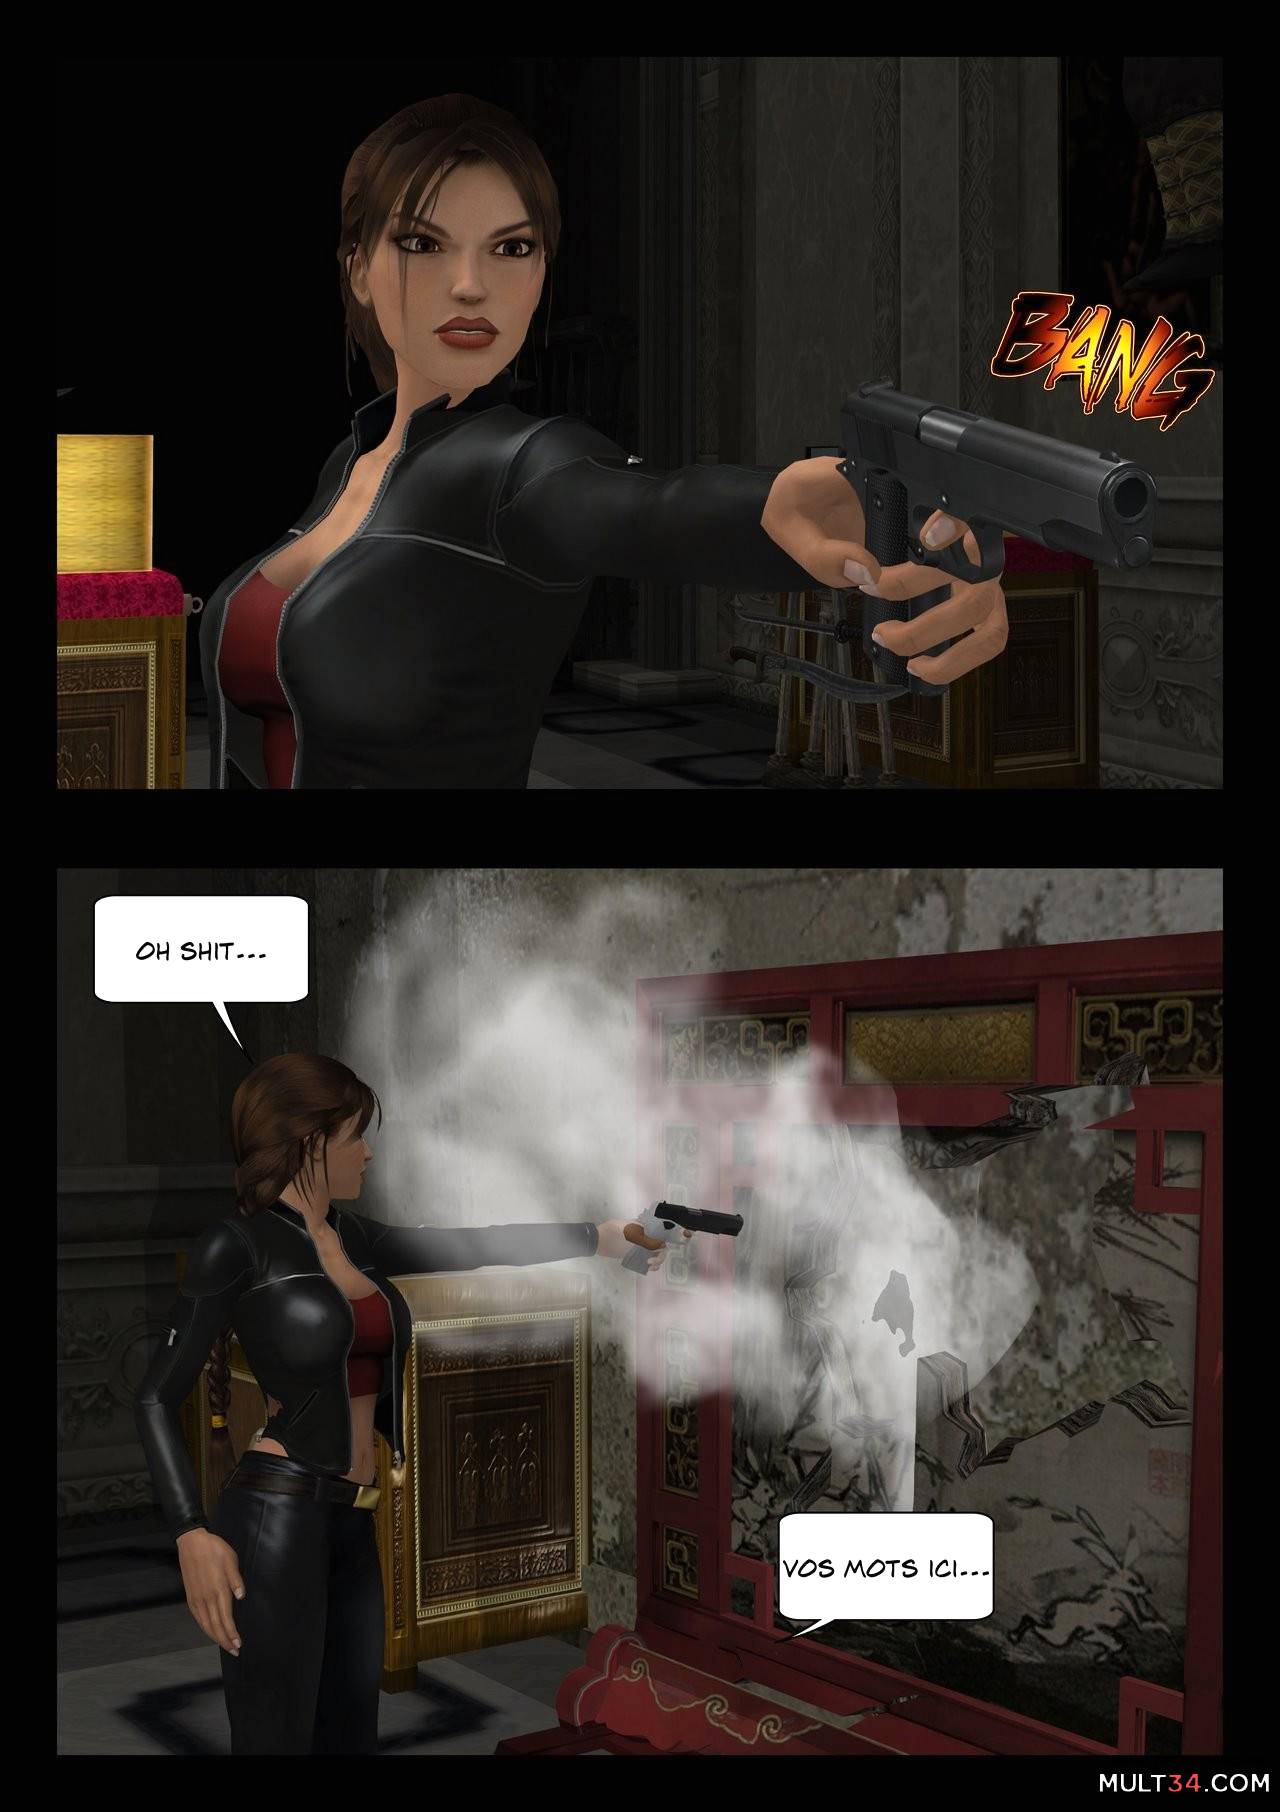 Tomb Raider Domination -The Misadventures of Lara Croft - chapter 1 page 10